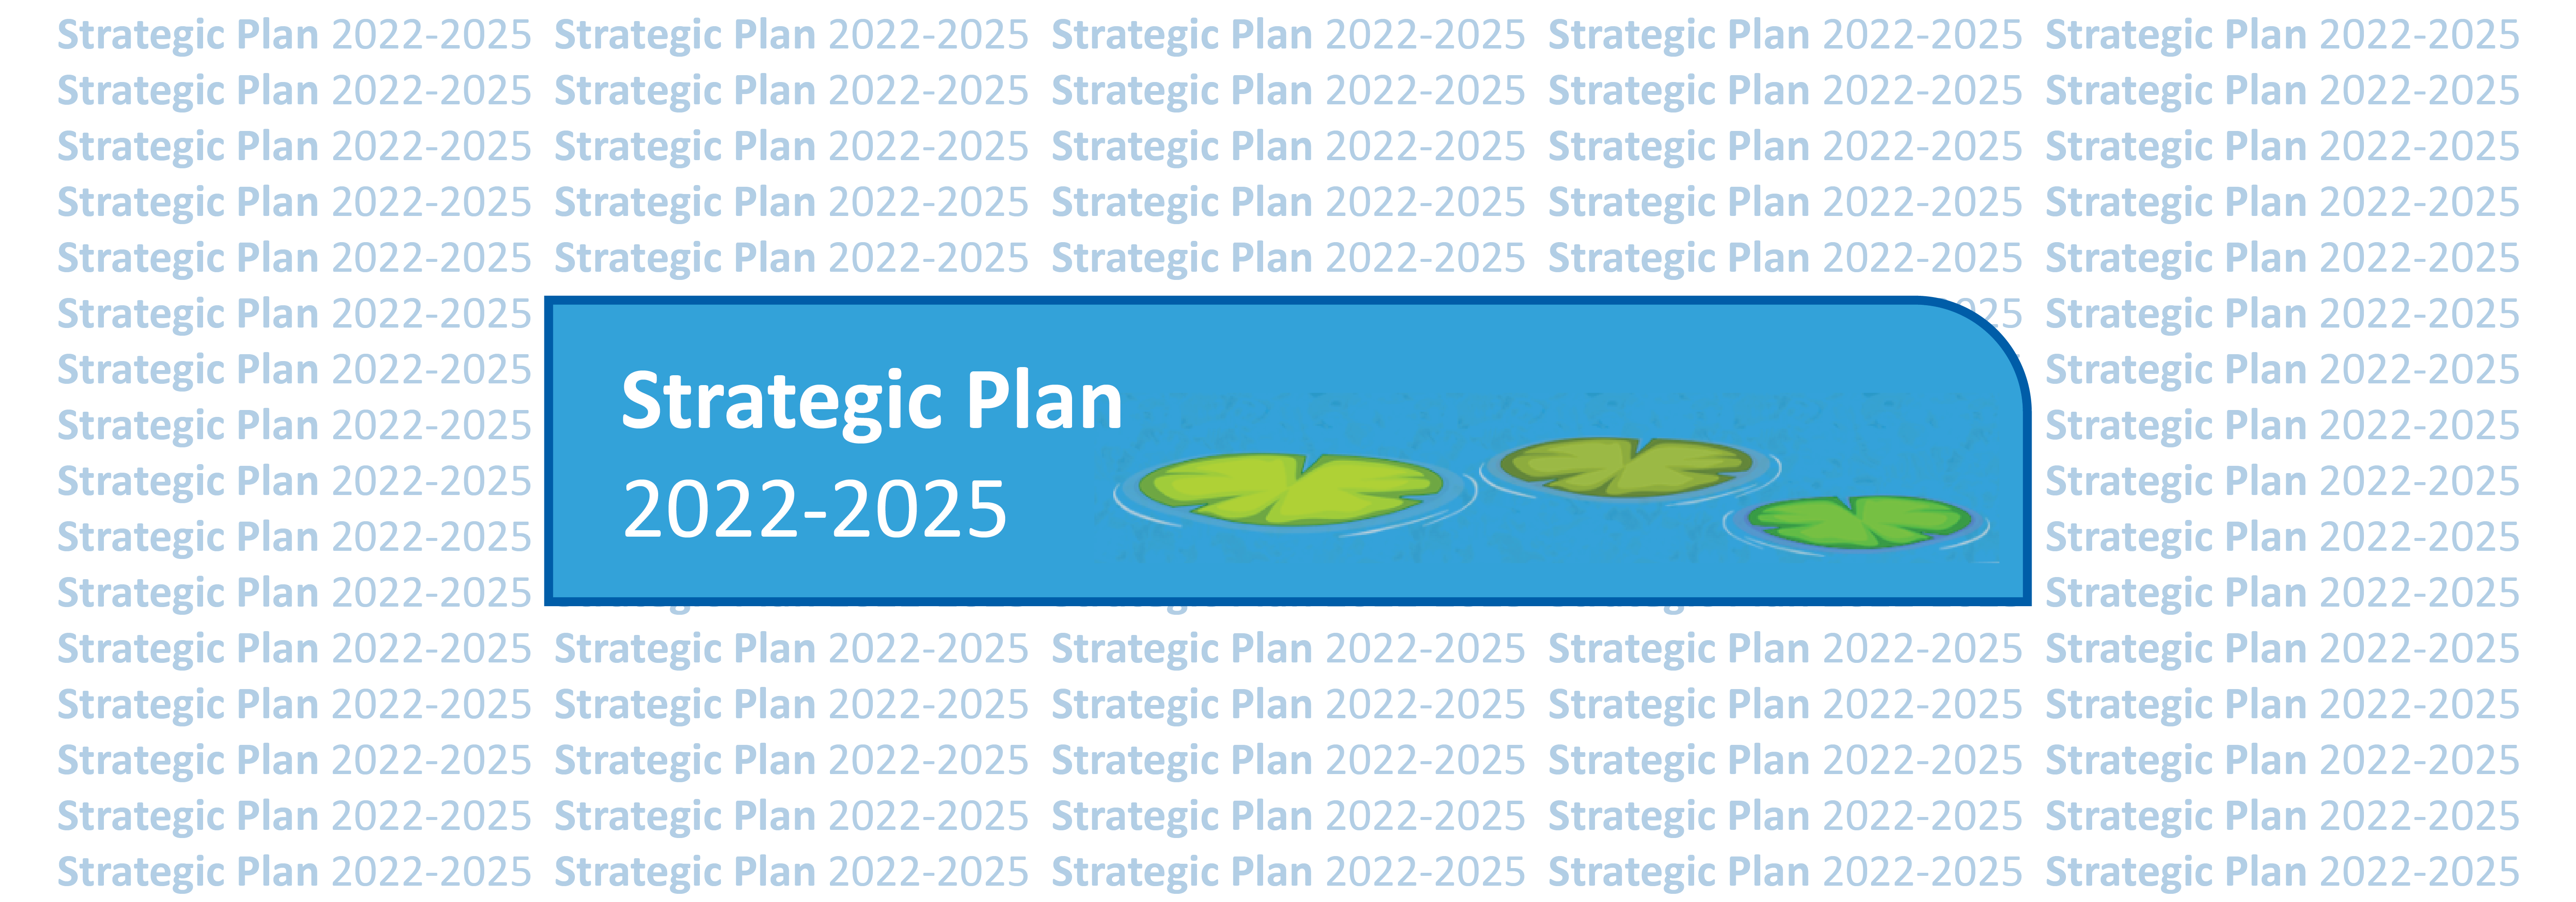 Strategic Plann 2022-2025